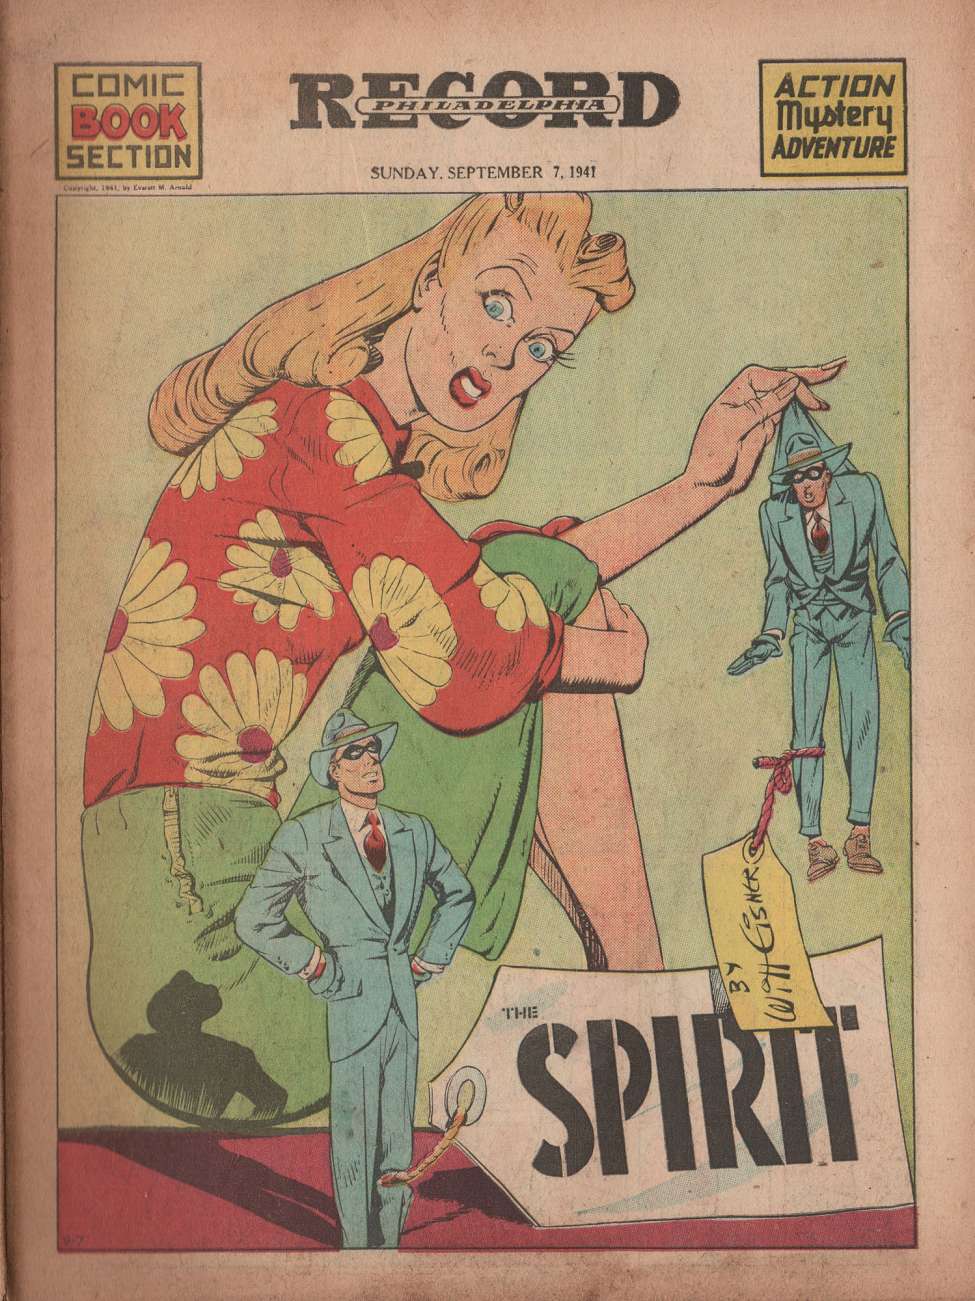 Comic Book Cover For The Spirit (1941-09-07) - Philadelphia Record